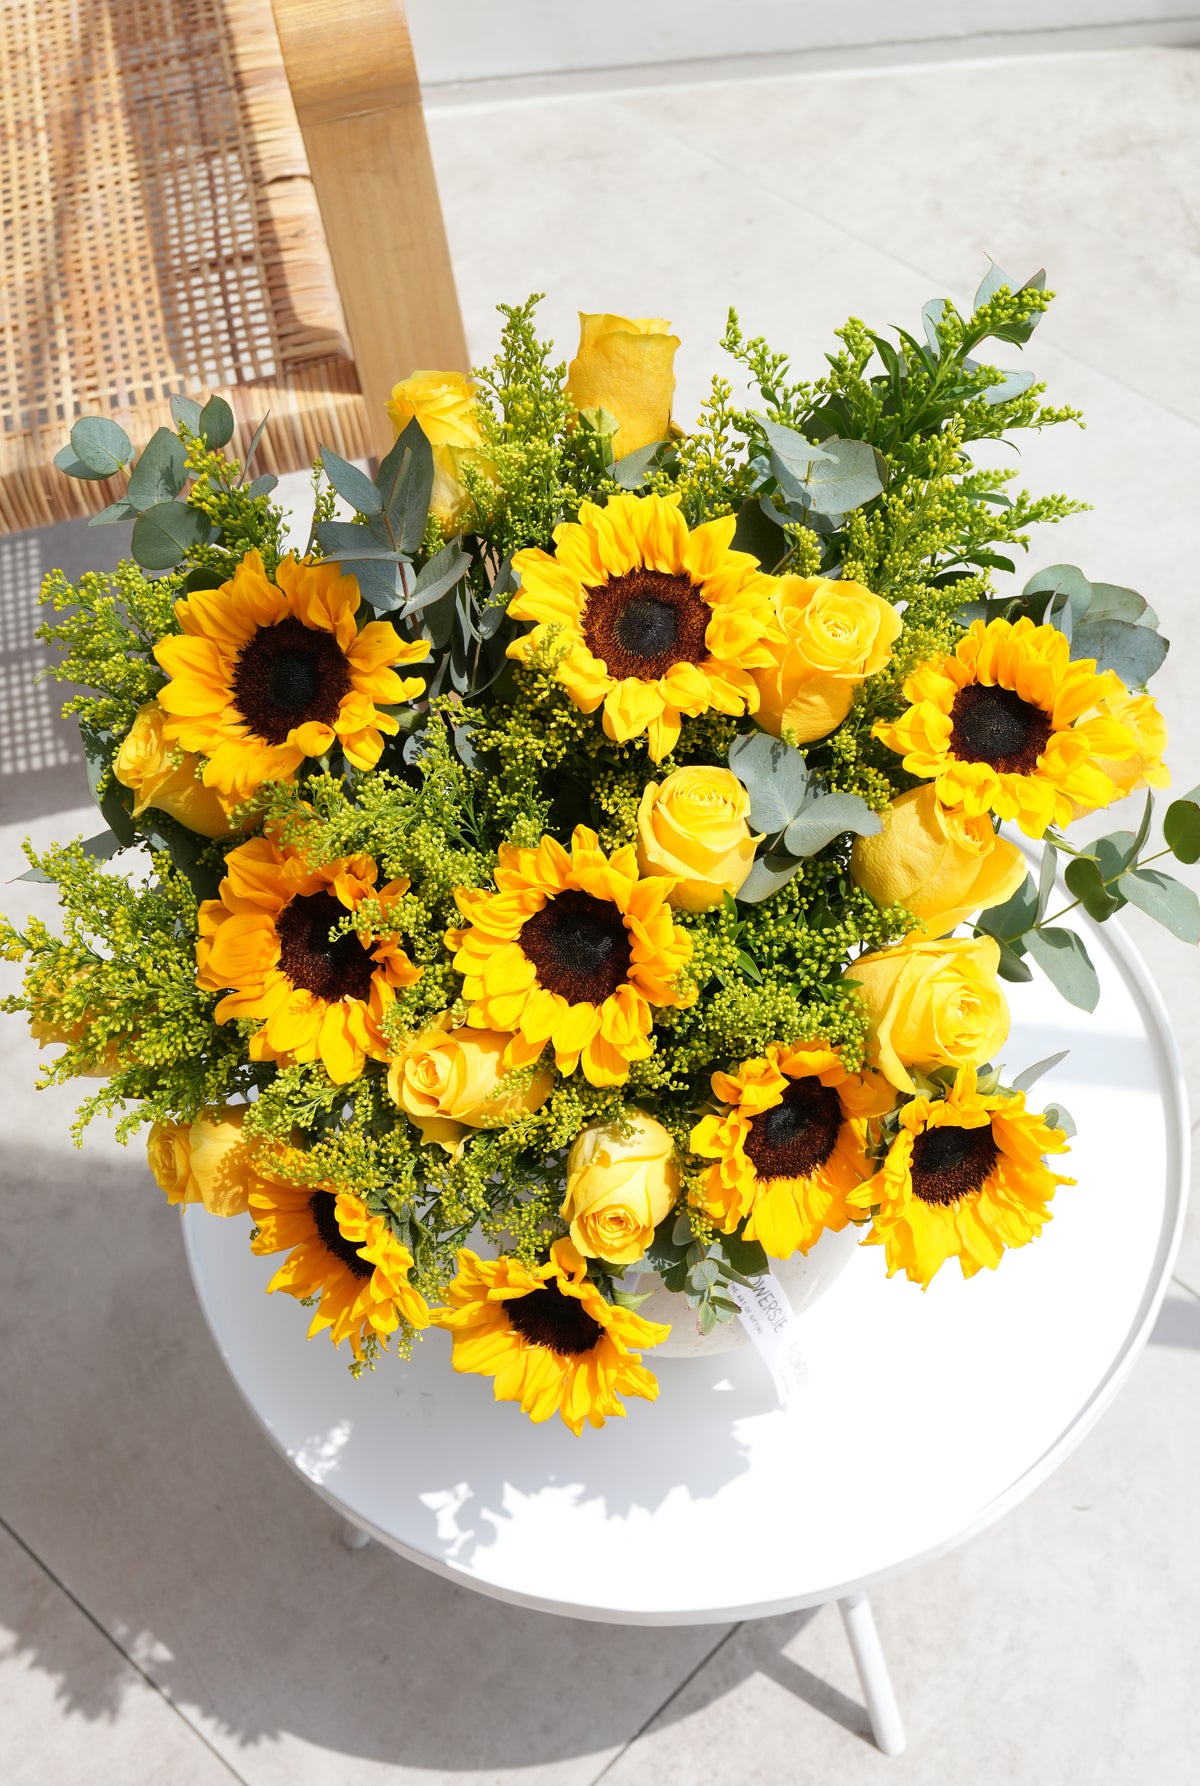 Wonderfully Sunflower in a Ceramic Vase